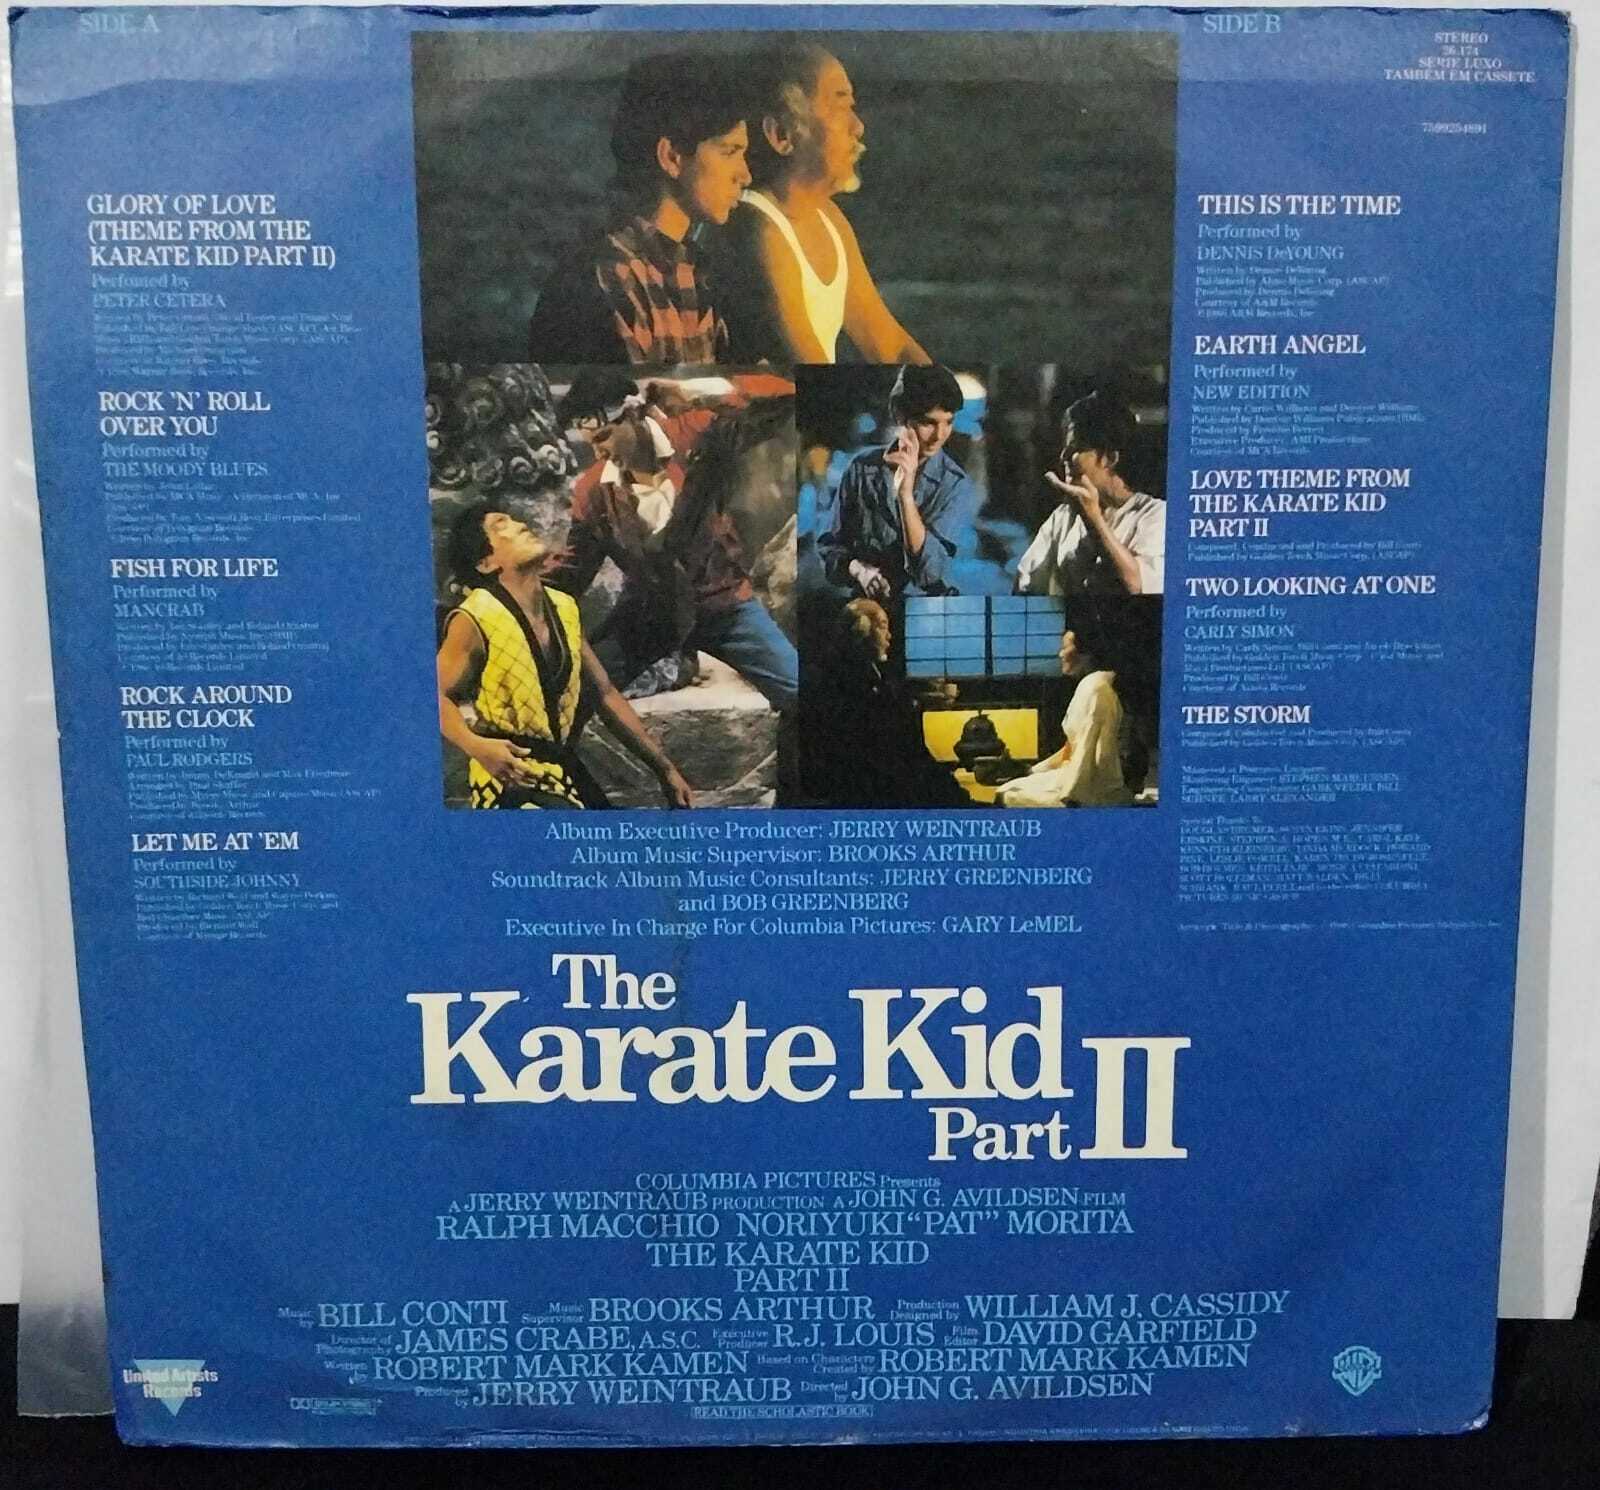 Vinil - Karate Kid the - Part II A Hora da Verdade Continua